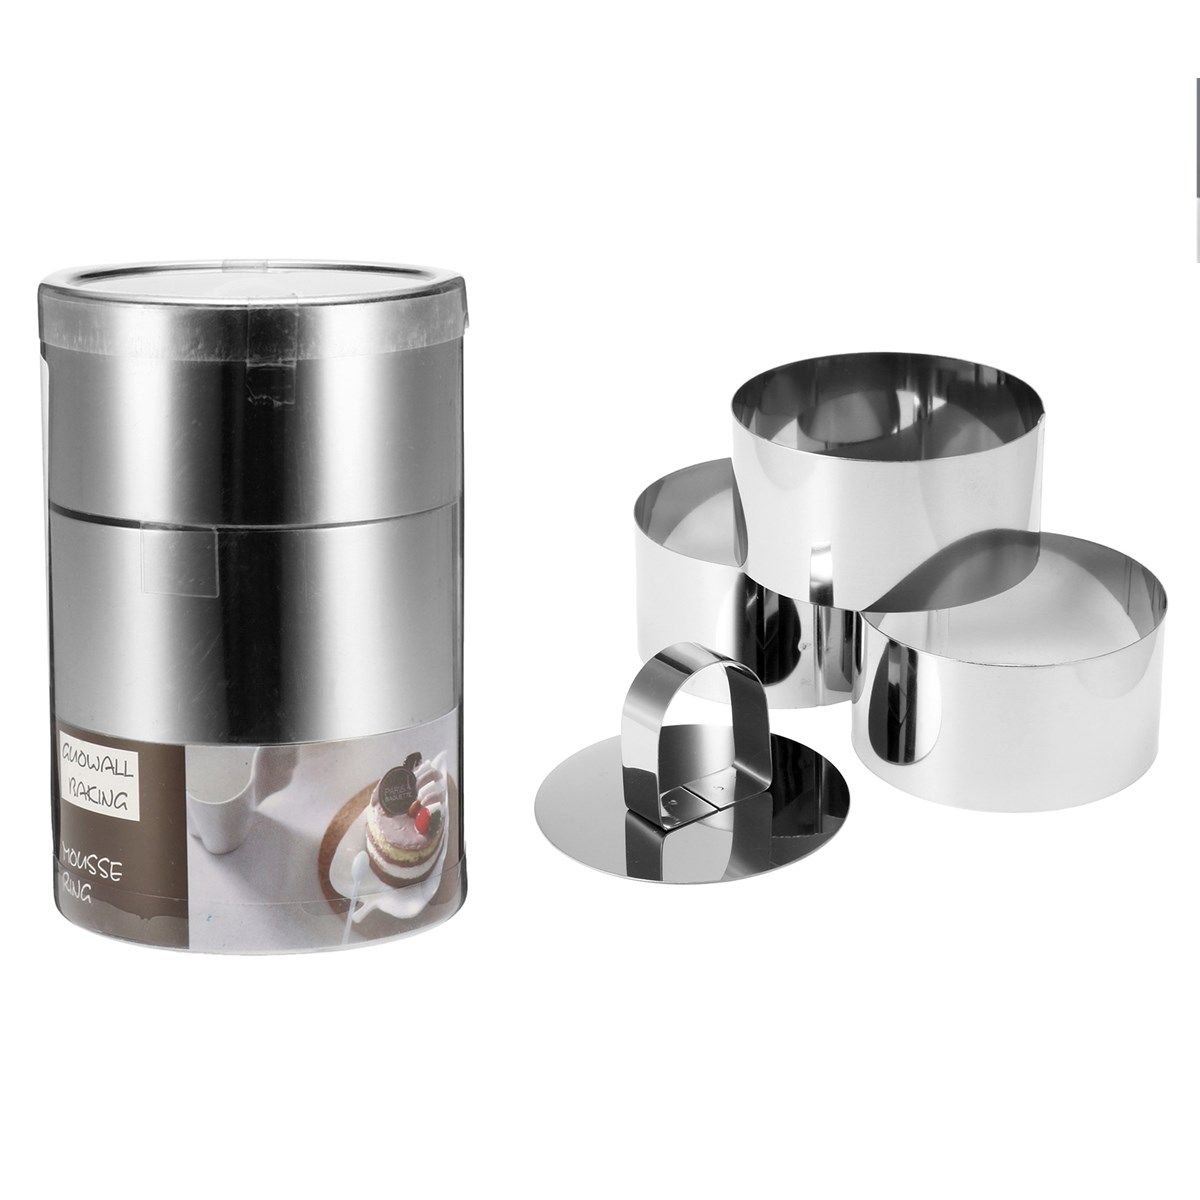 4Pcs-Stainless-Steel-DIY-Cake-Mould-Food-Cooking-Pusher-amp-Round-Rings-Baking-Tools-1358360